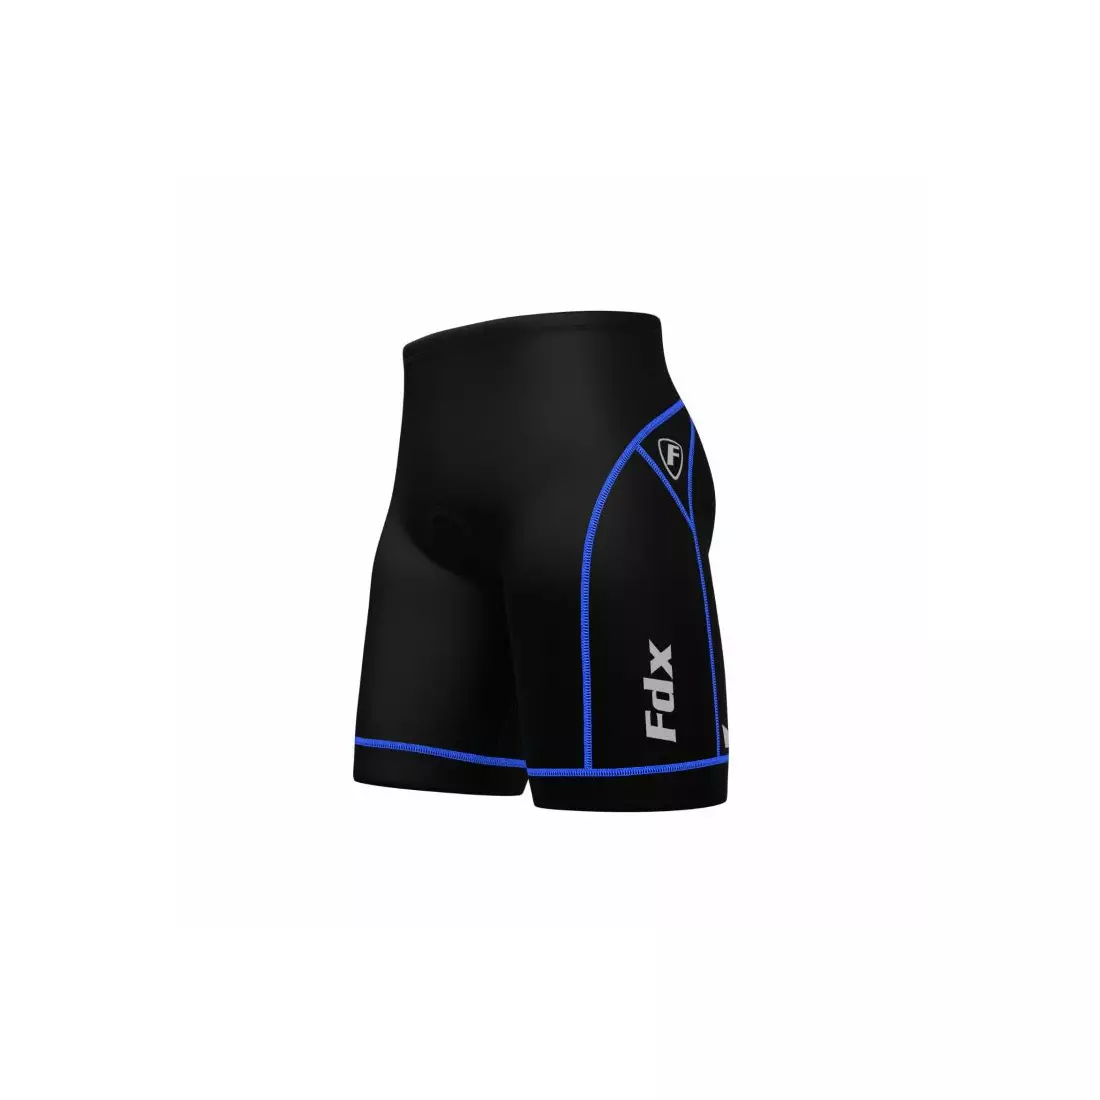 FDX 990 men's bibless cycling shorts, black and blue